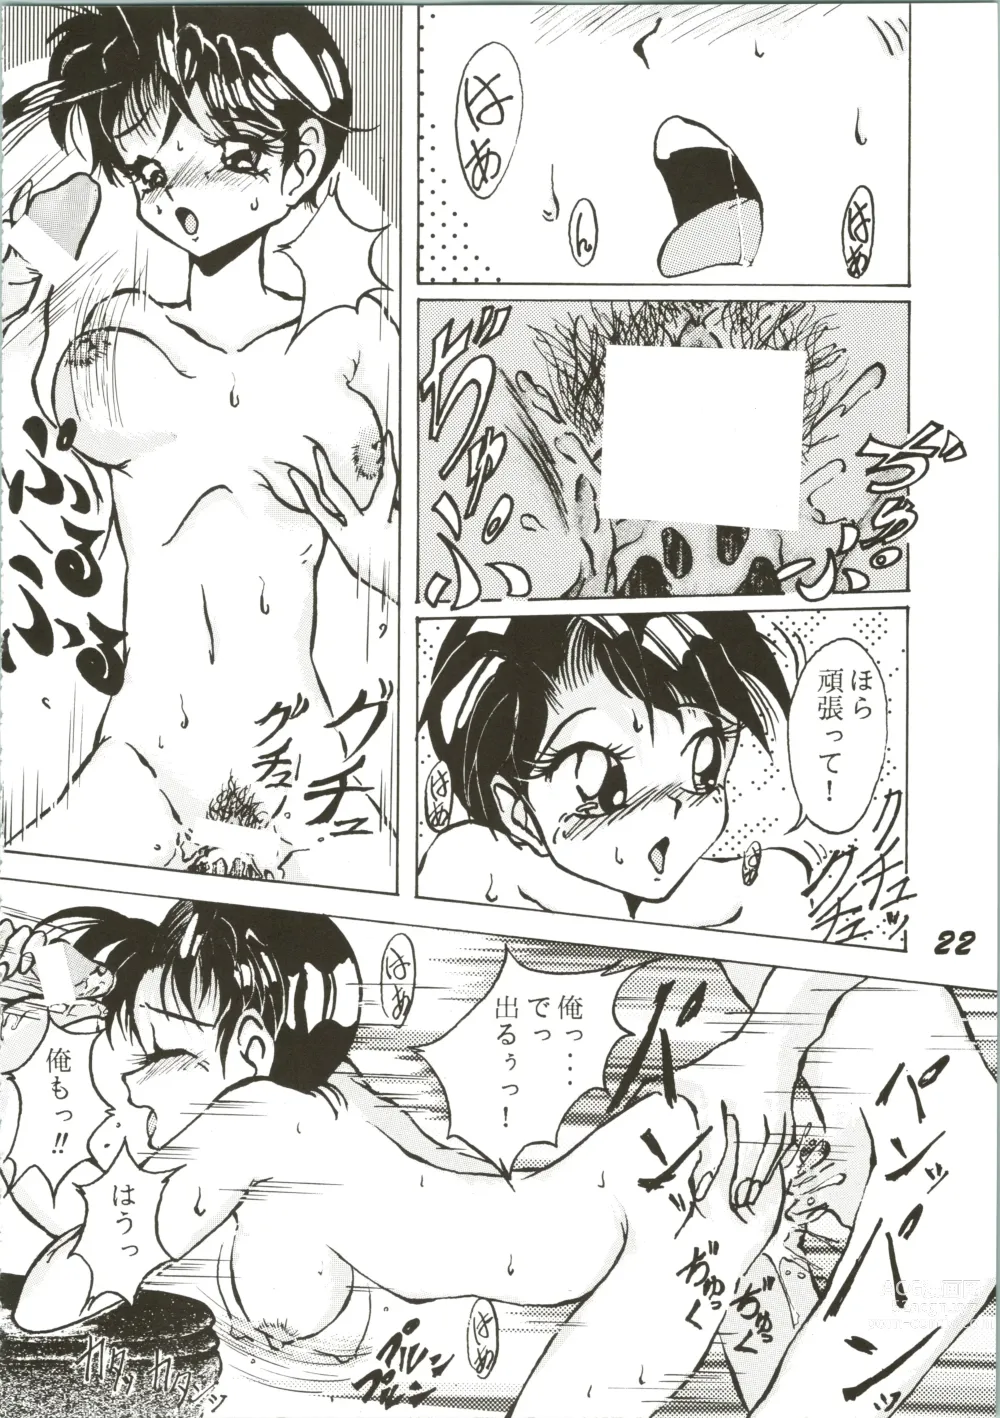 Page 22 of doujinshi OVA SPIRITS